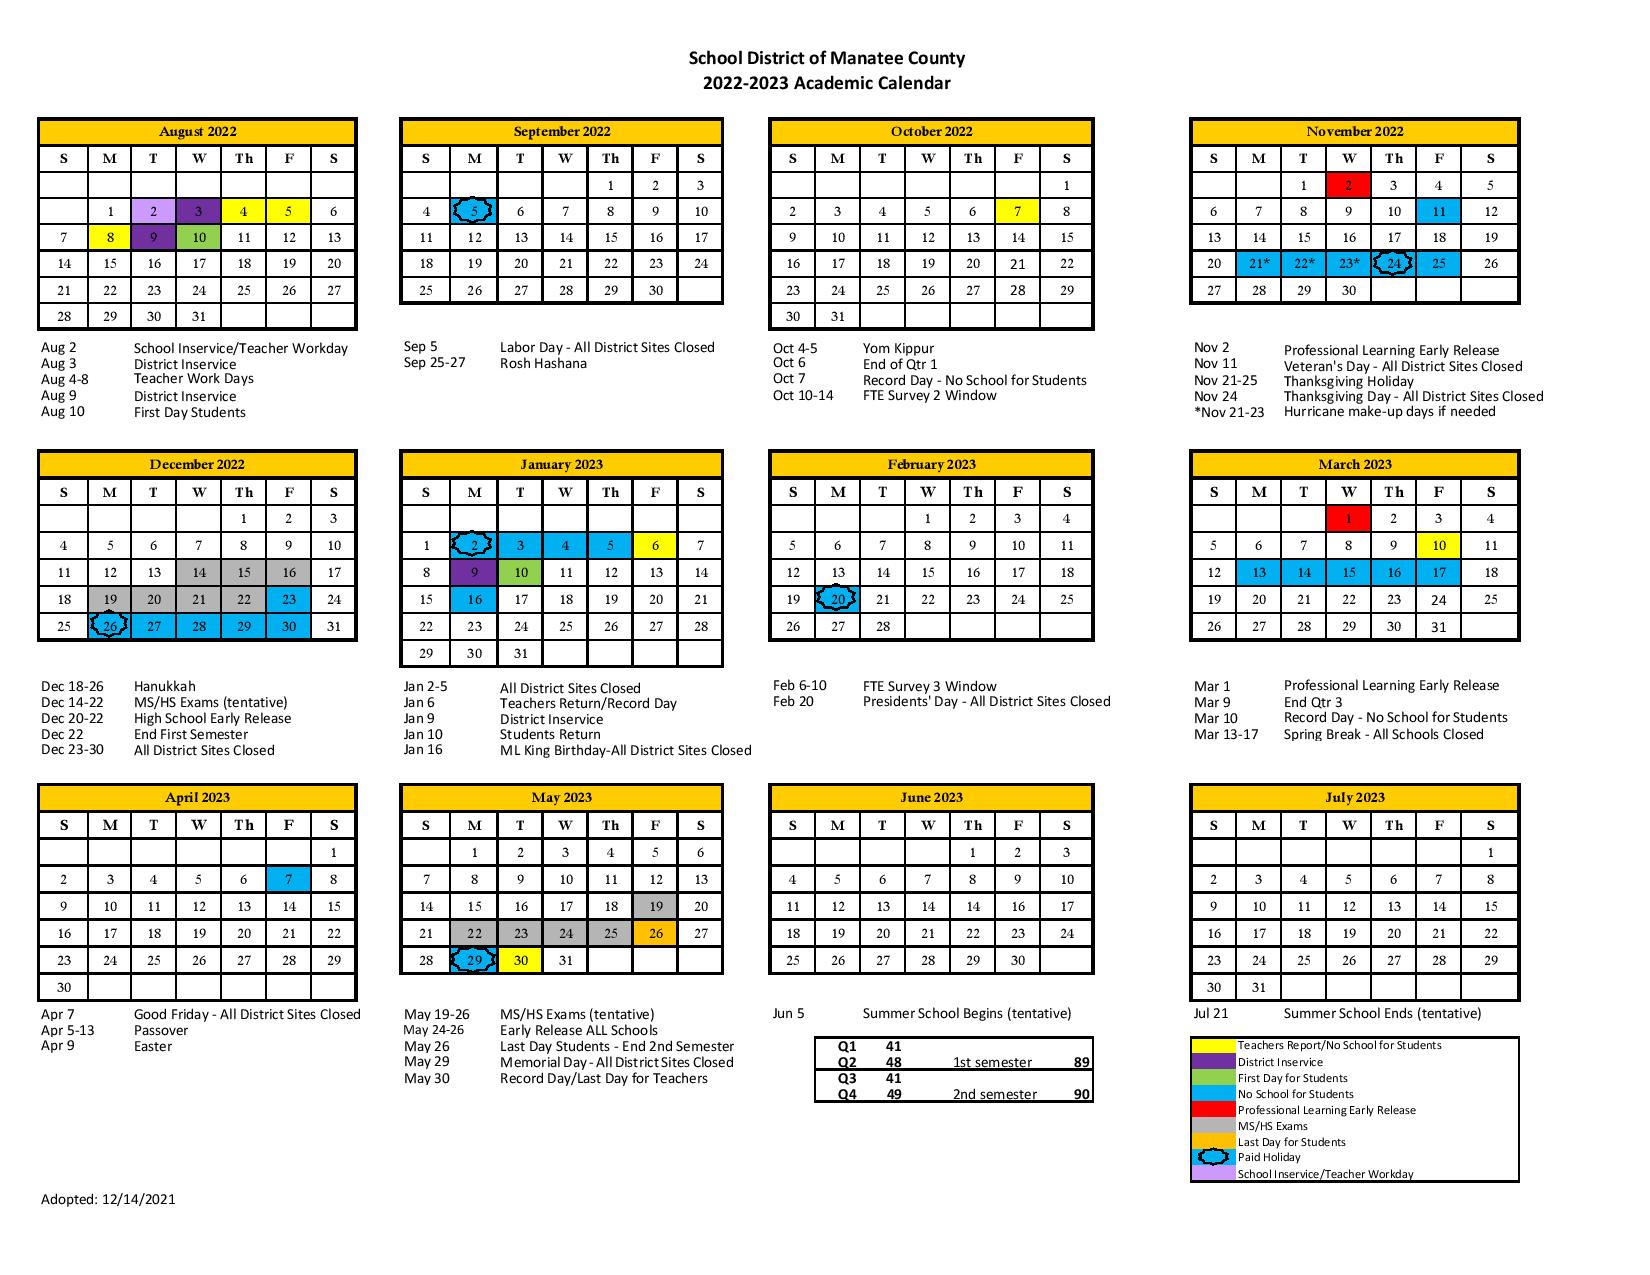 Manatee County School District Calendar 20222023